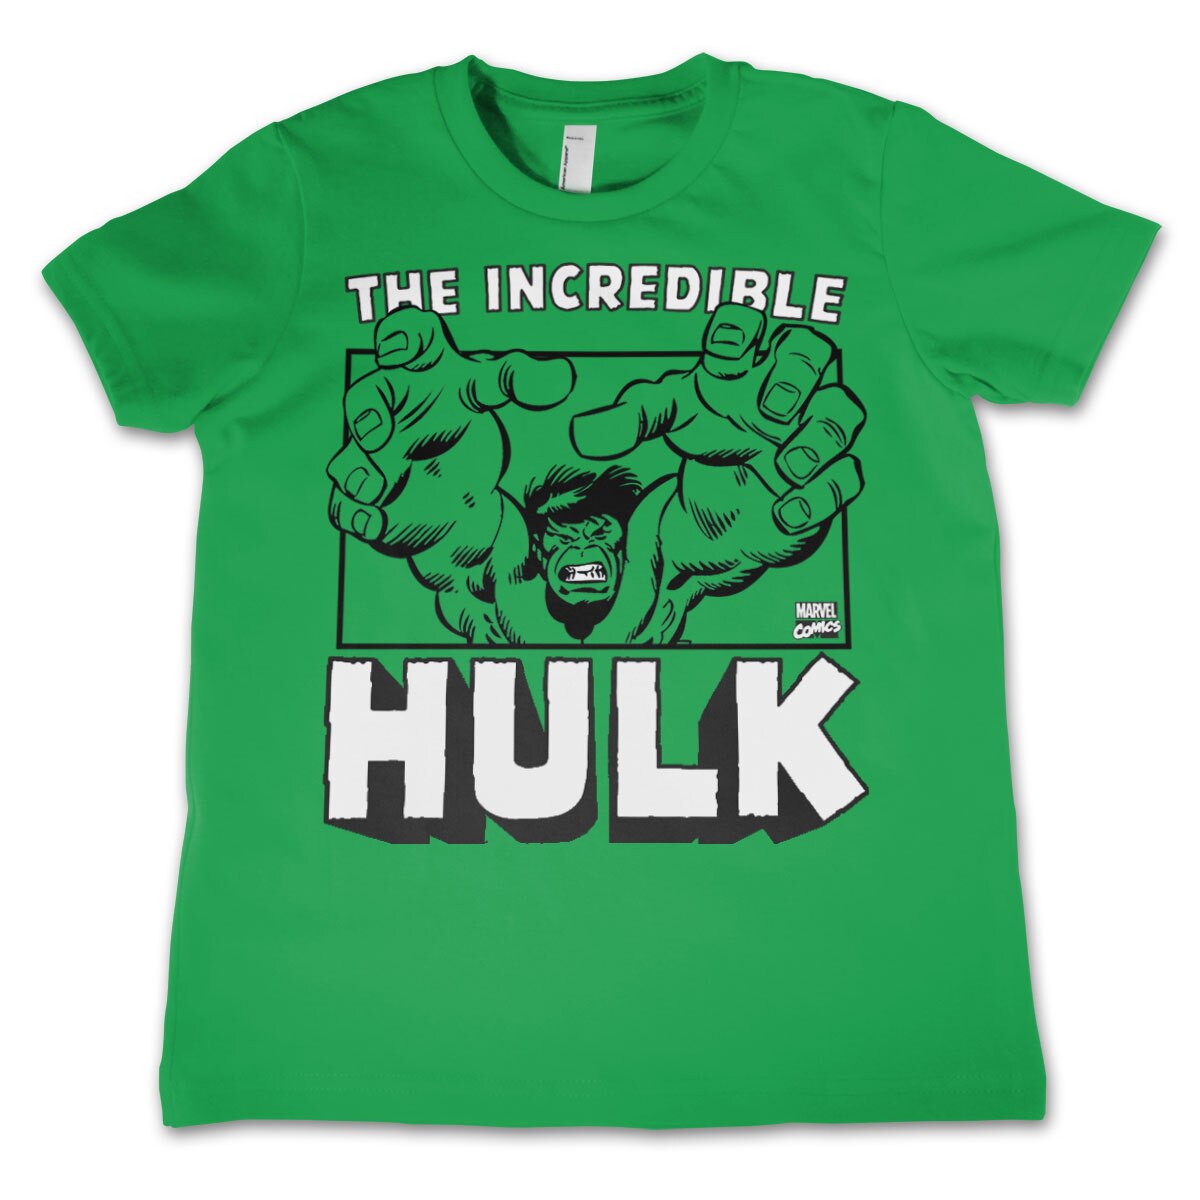 The Incredible Hulk Kids T-Shirt